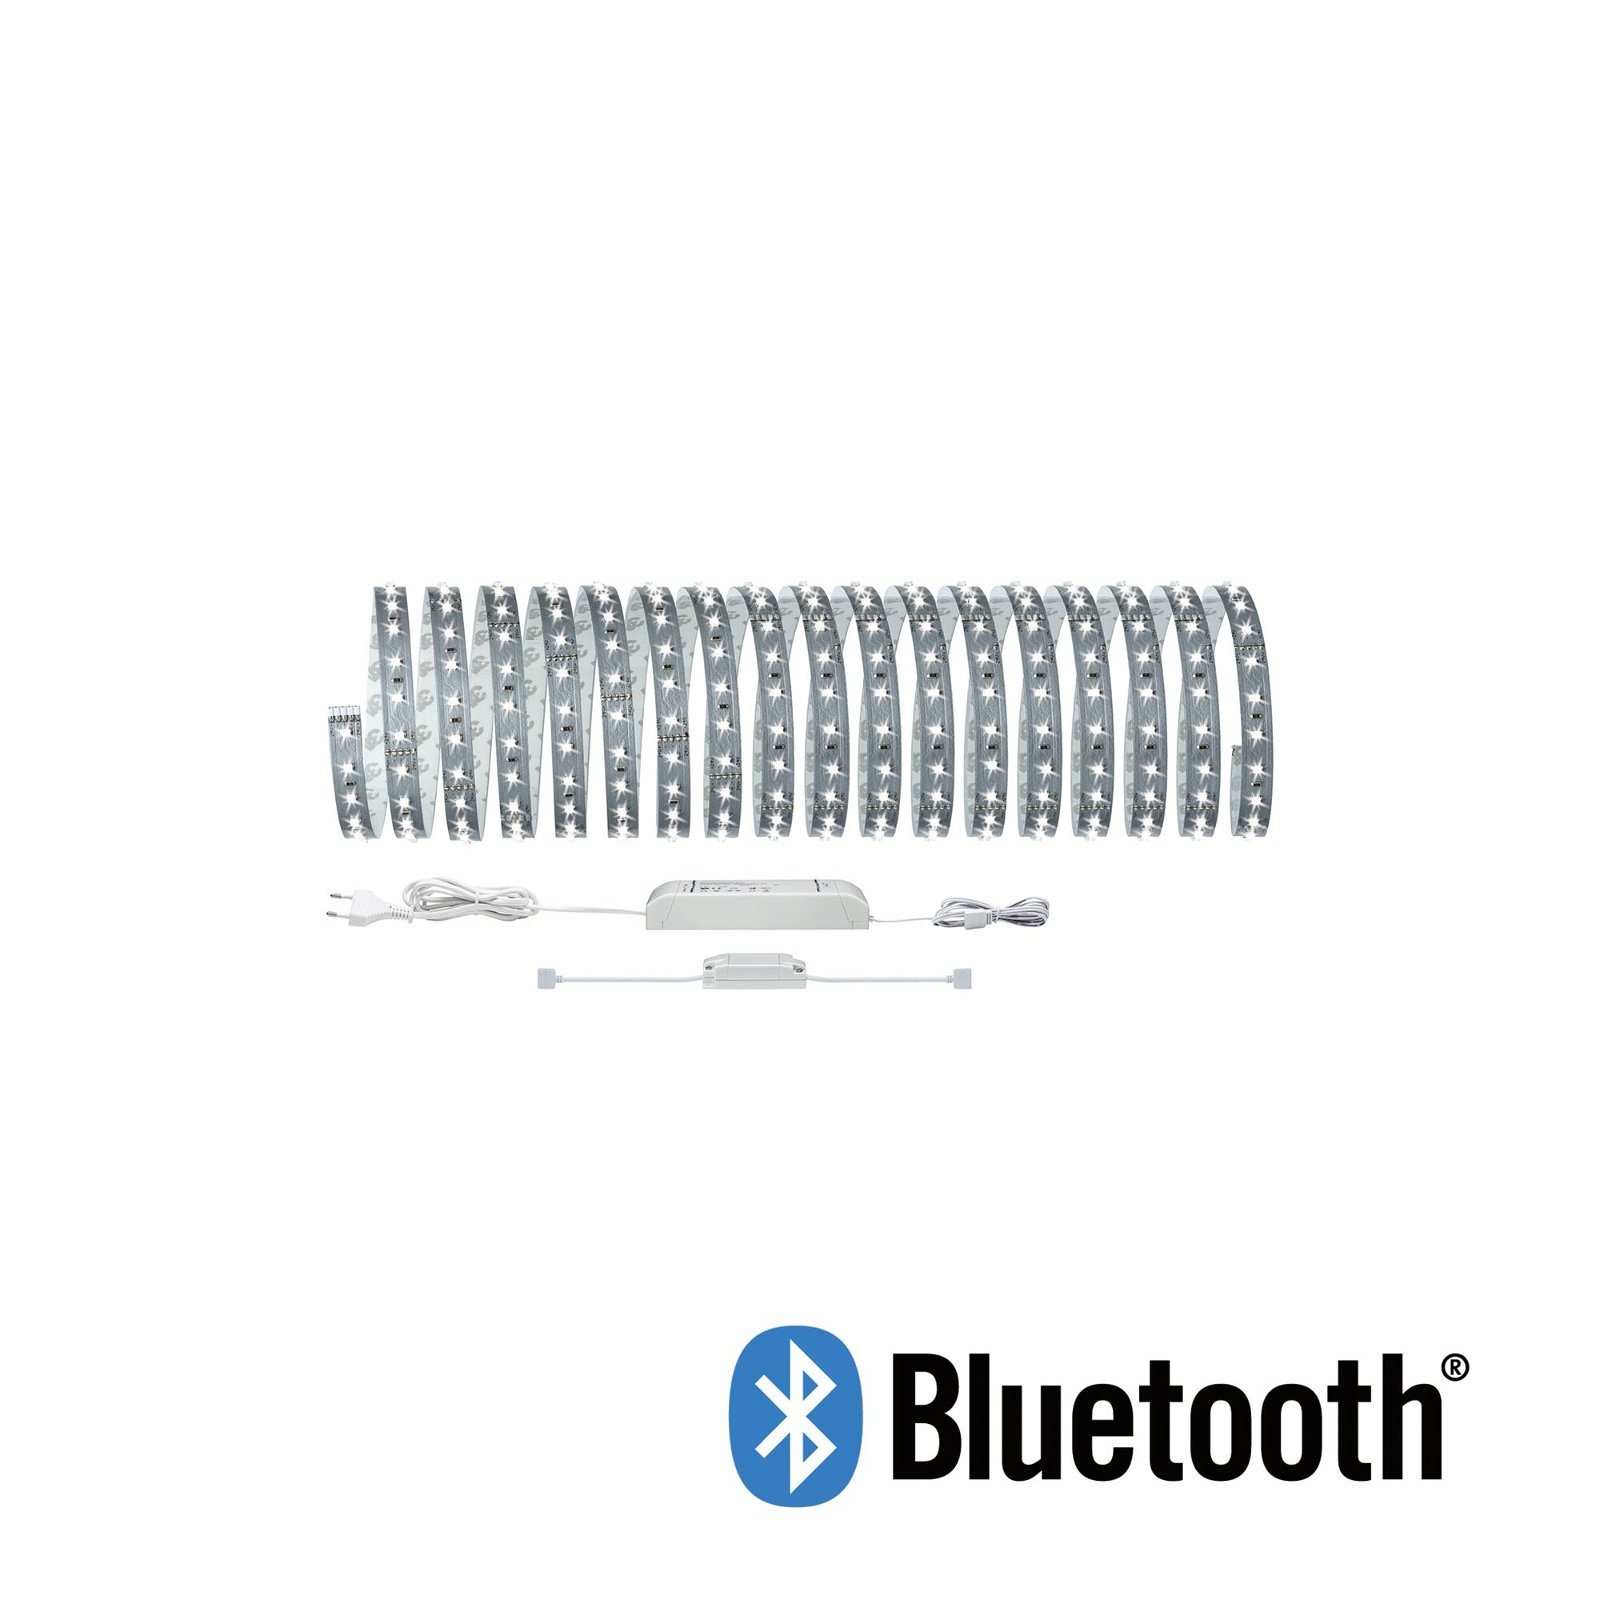 MaxLED 500 LED Strip Smart Home Bluetooth Tageslichtweiß Basisset 10m 50W 550lm/m 6500K 75VA